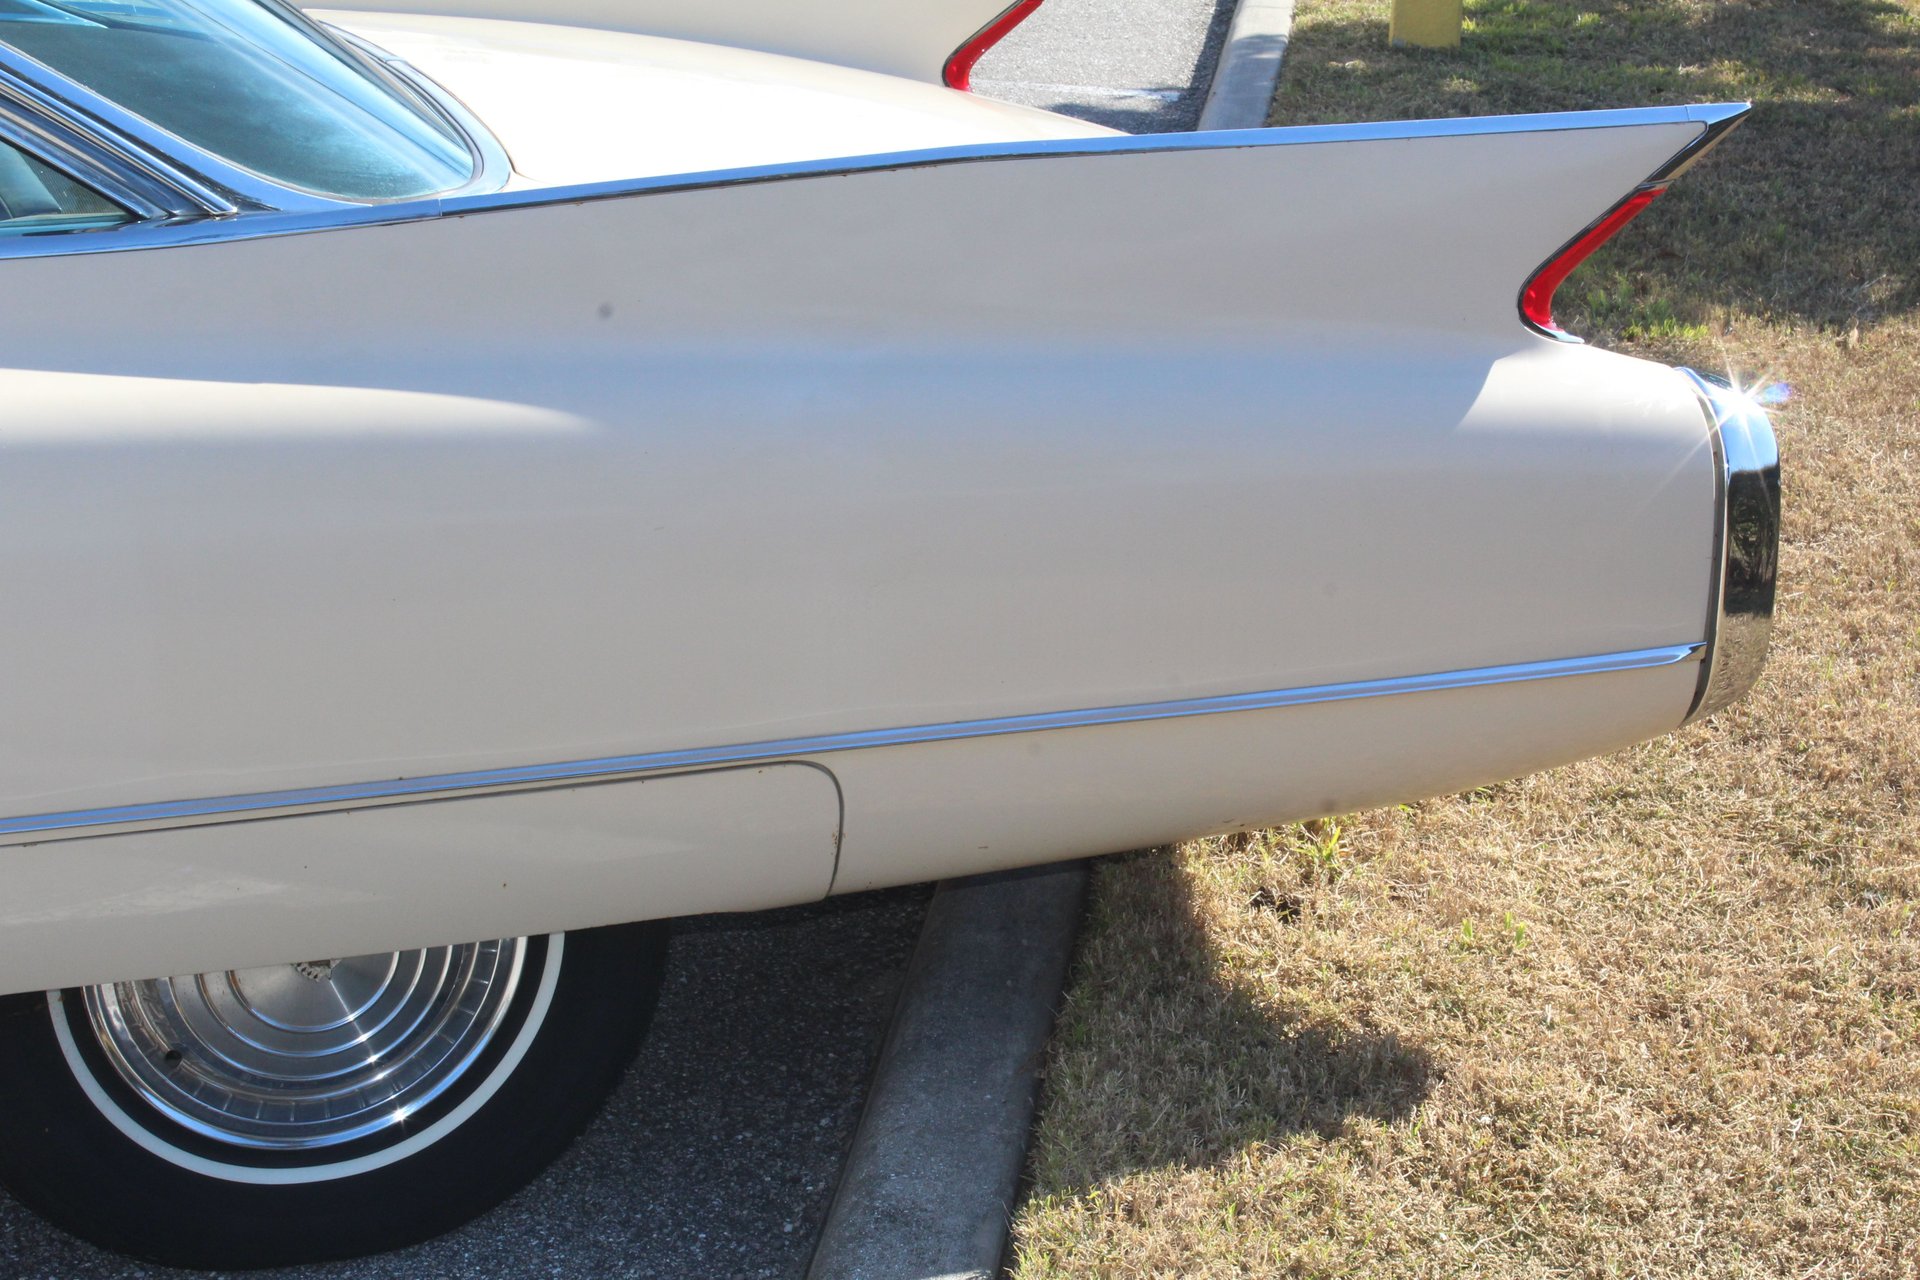 For Sale 1960 Cadillac DeVille